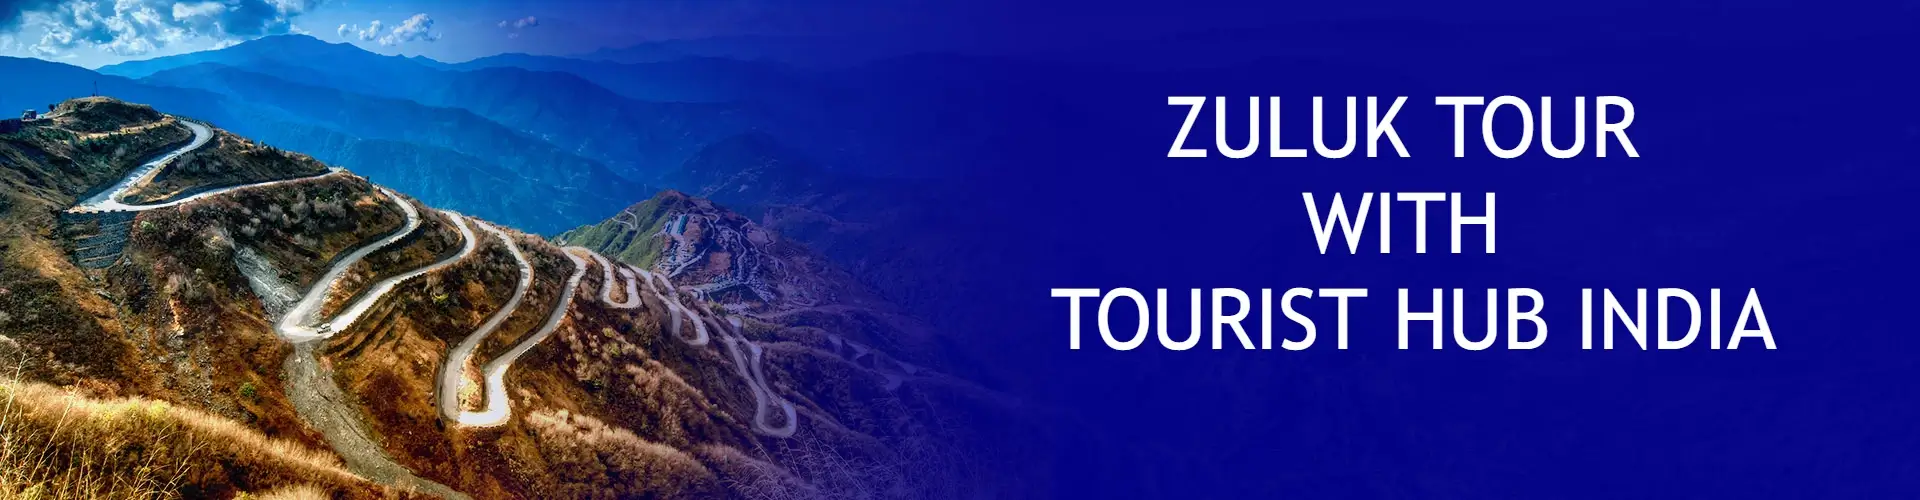 Wonderful zuluk Tour Booking from Kolkata, India with TouristHubIndia - The Best Silk Route Package Tour Operator in Kolkata